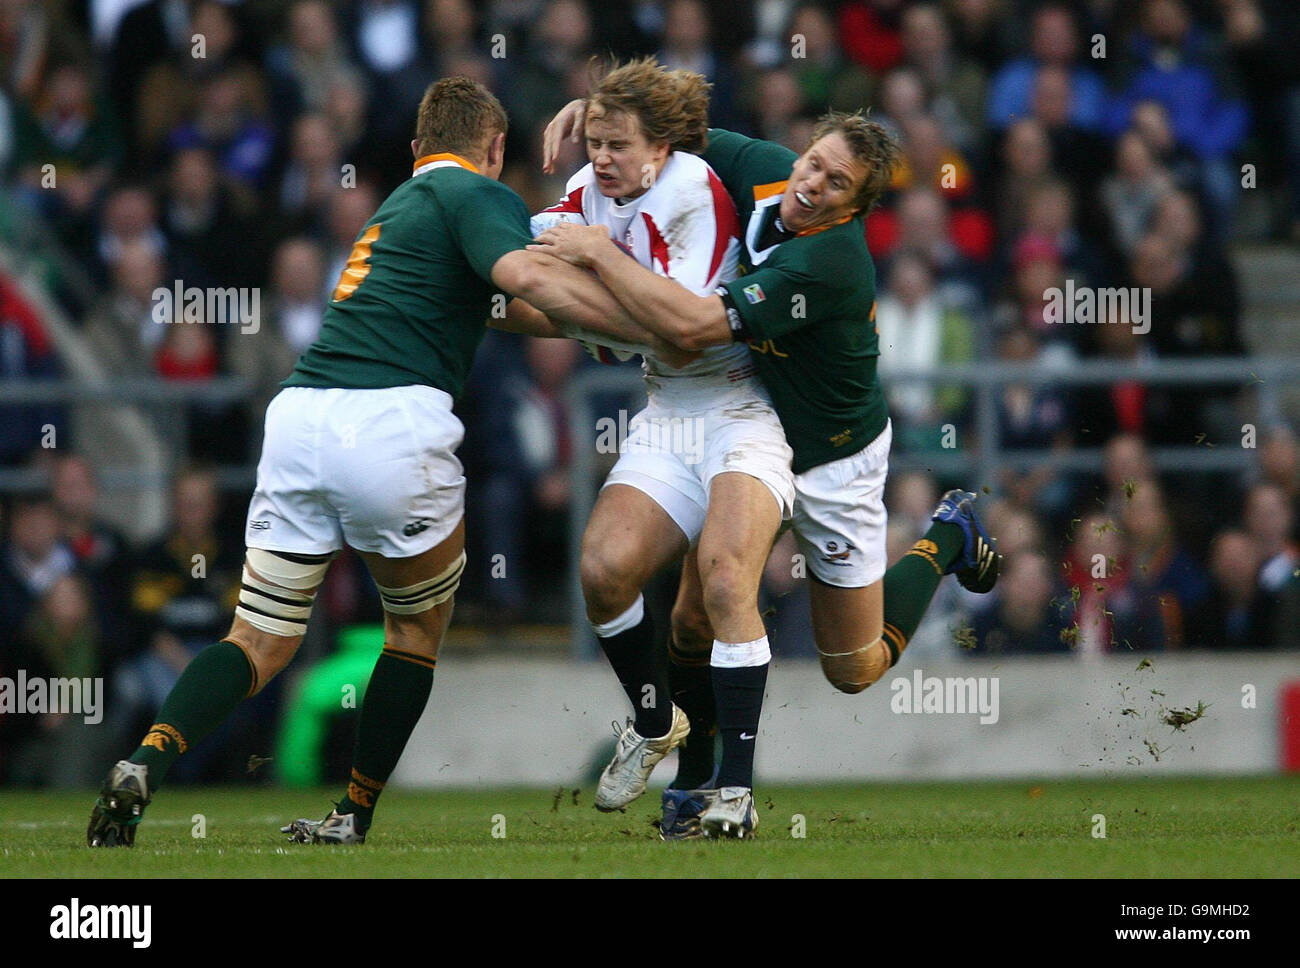 Rugby Union - Partita internazionale - Inghilterra v Sud Africa - Twickenham Foto Stock